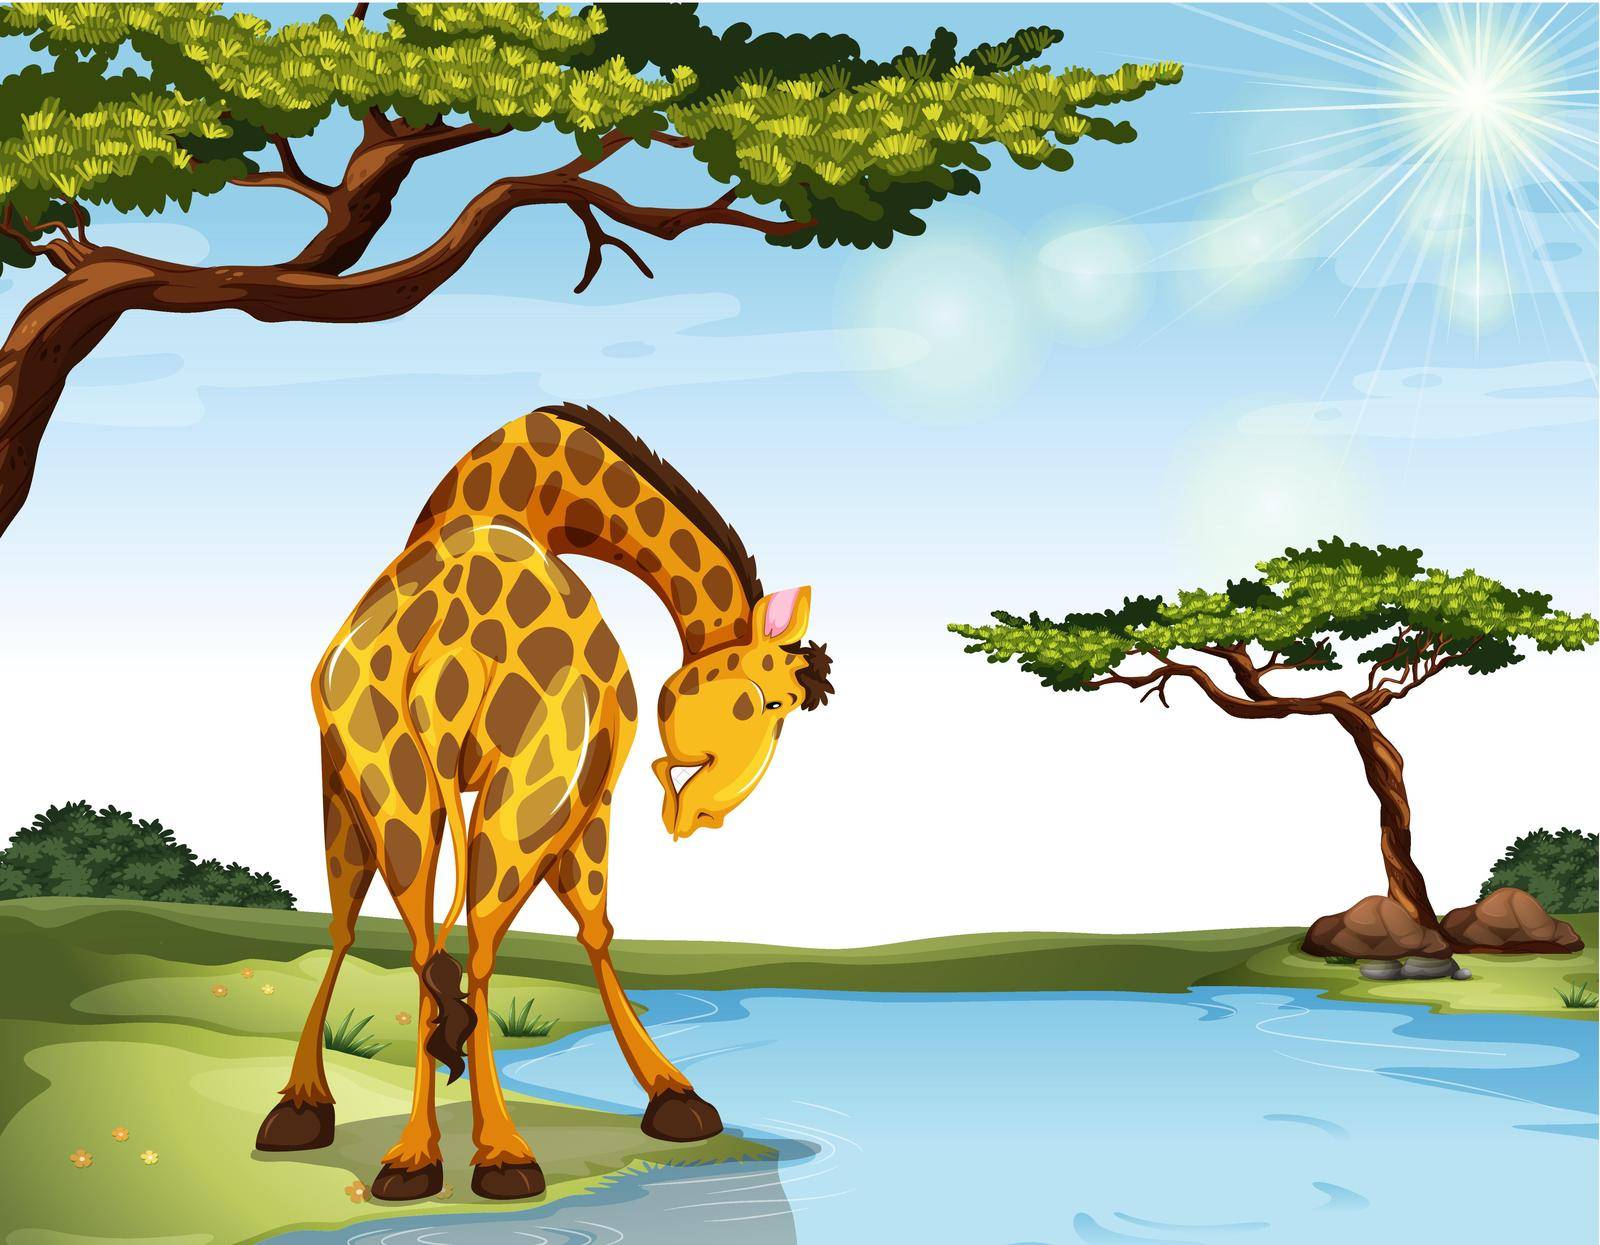 Giraffe standing at the river bank